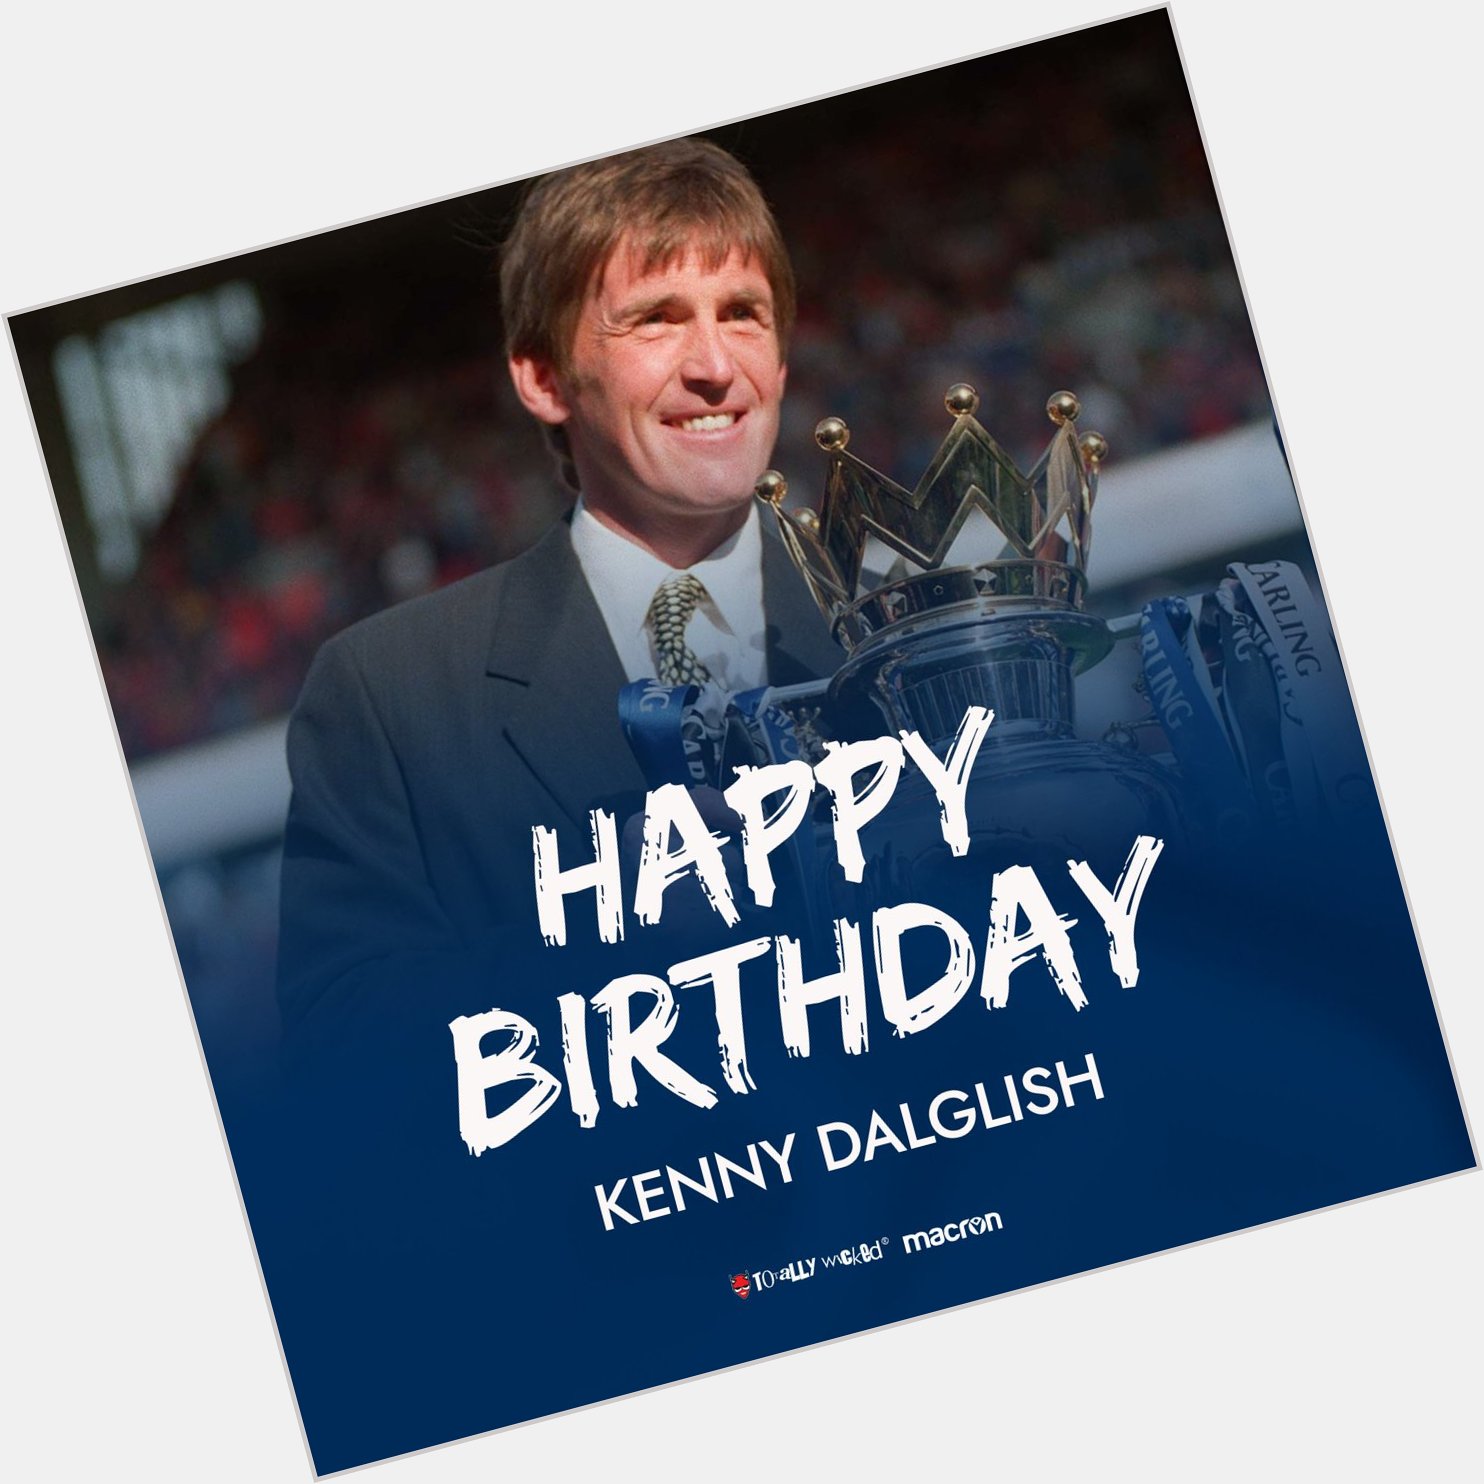  Happy birthday to the man who led us to Premier League glory, Kenny Dalglish!    